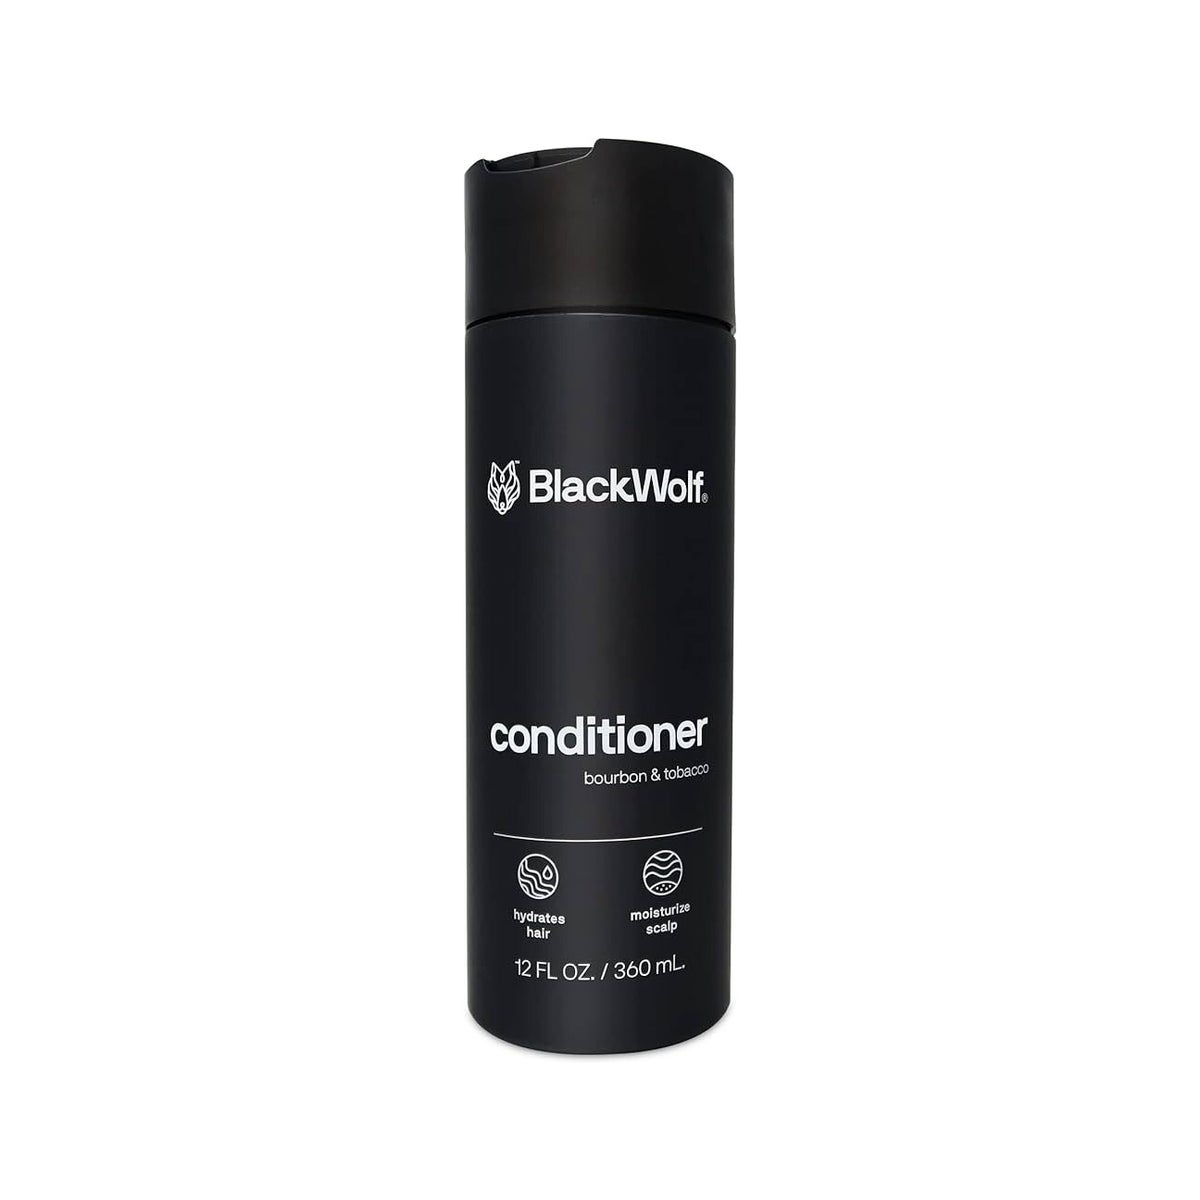 BlackWolf - Conditioner (360ml)